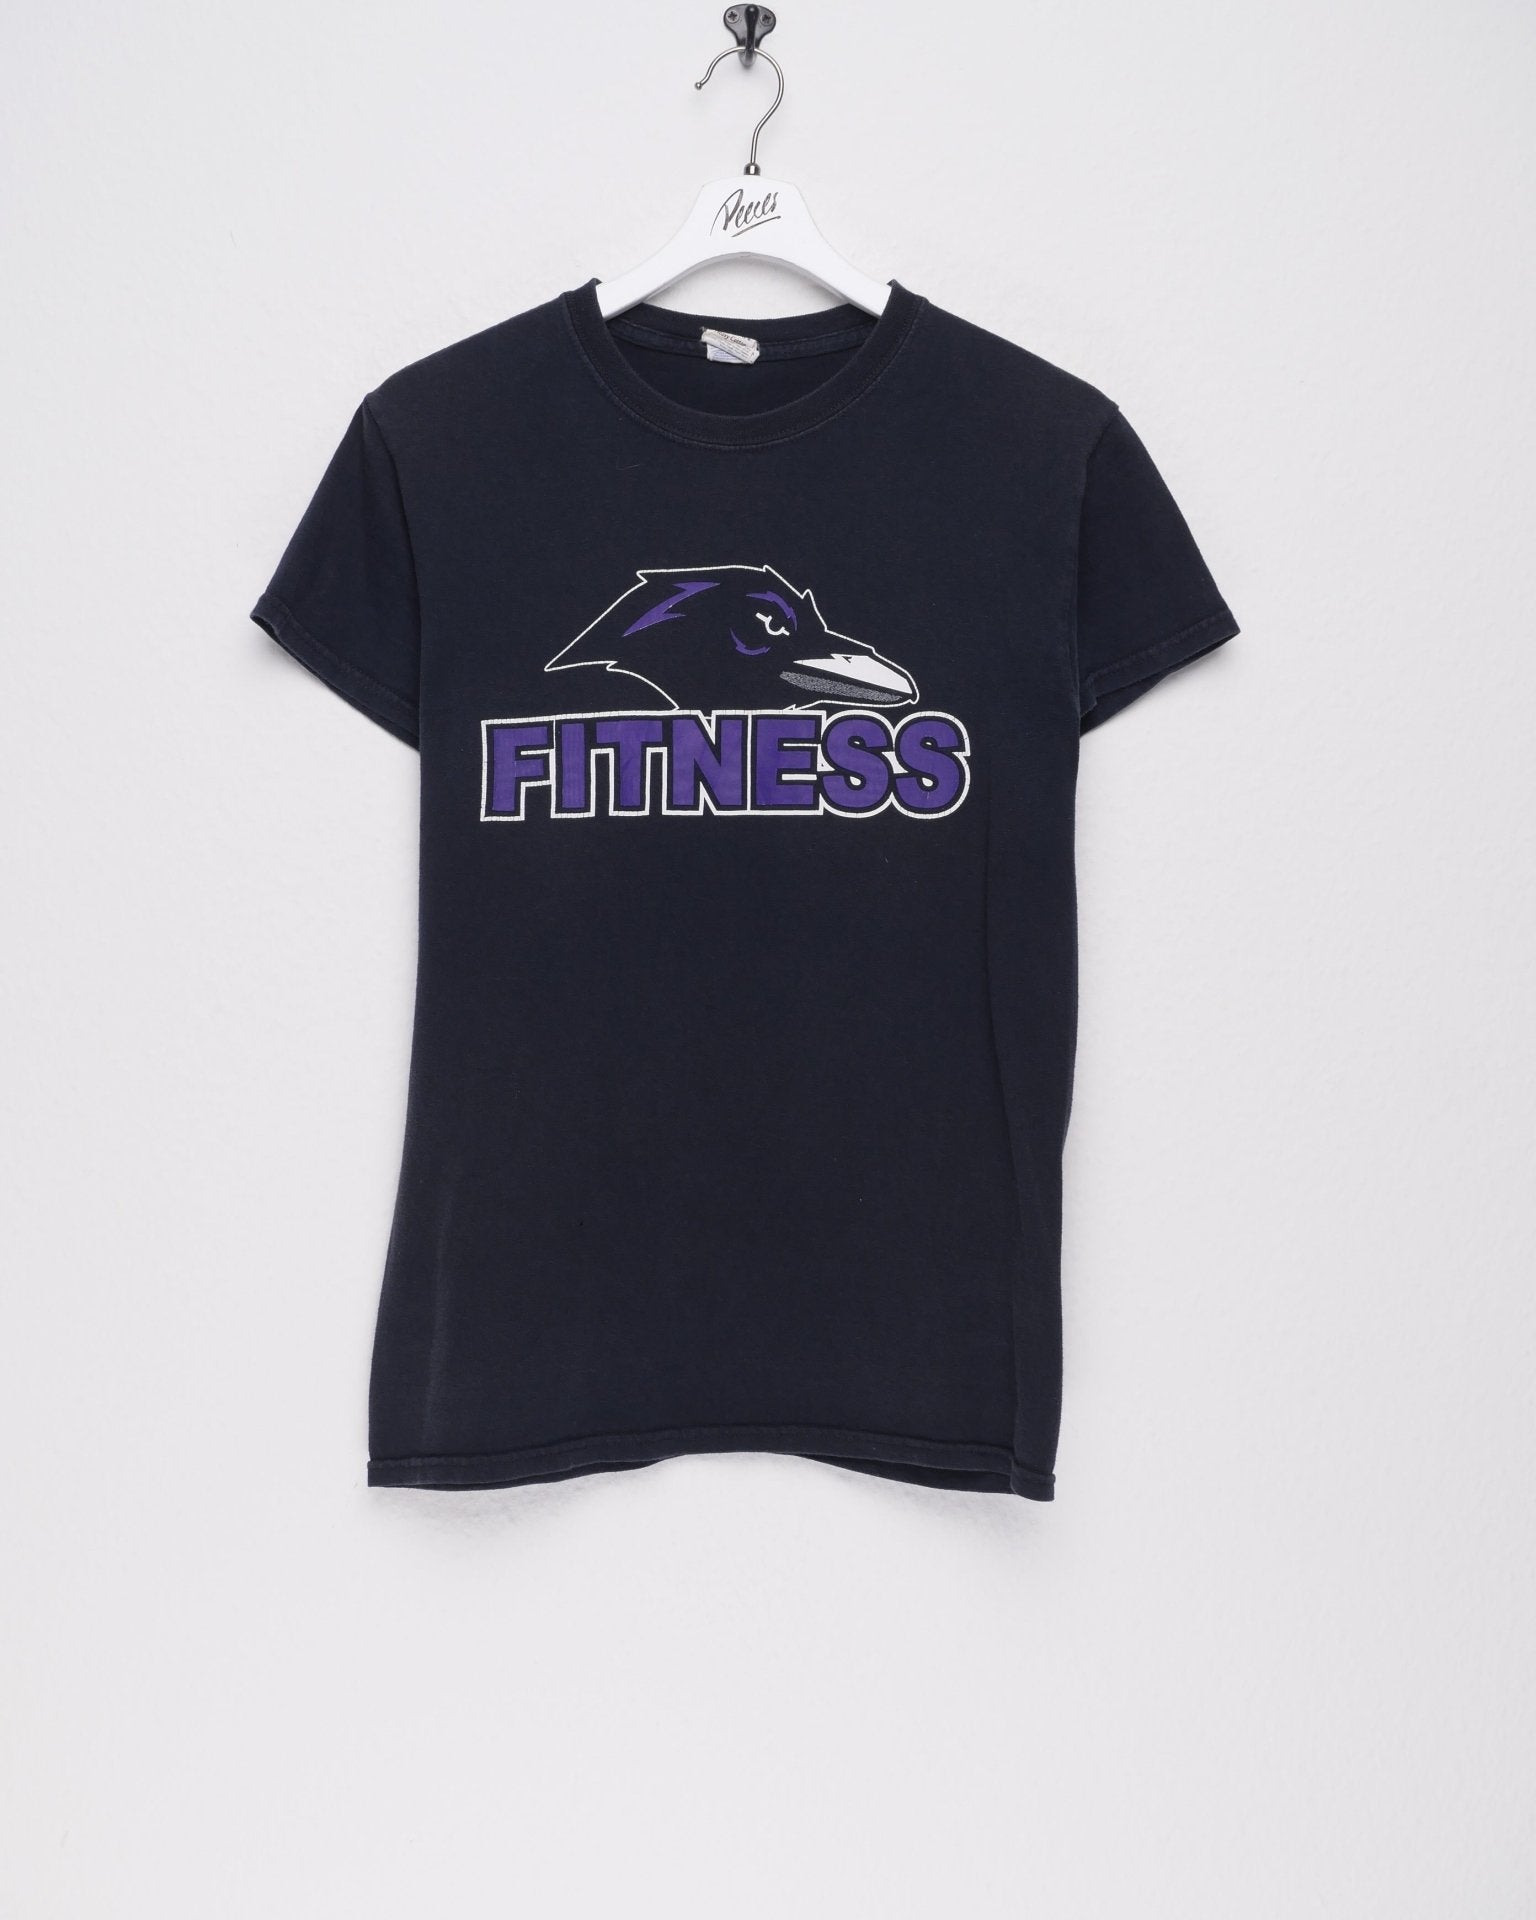 printed Logo 'Fitness' washed black Shirt - Peeces